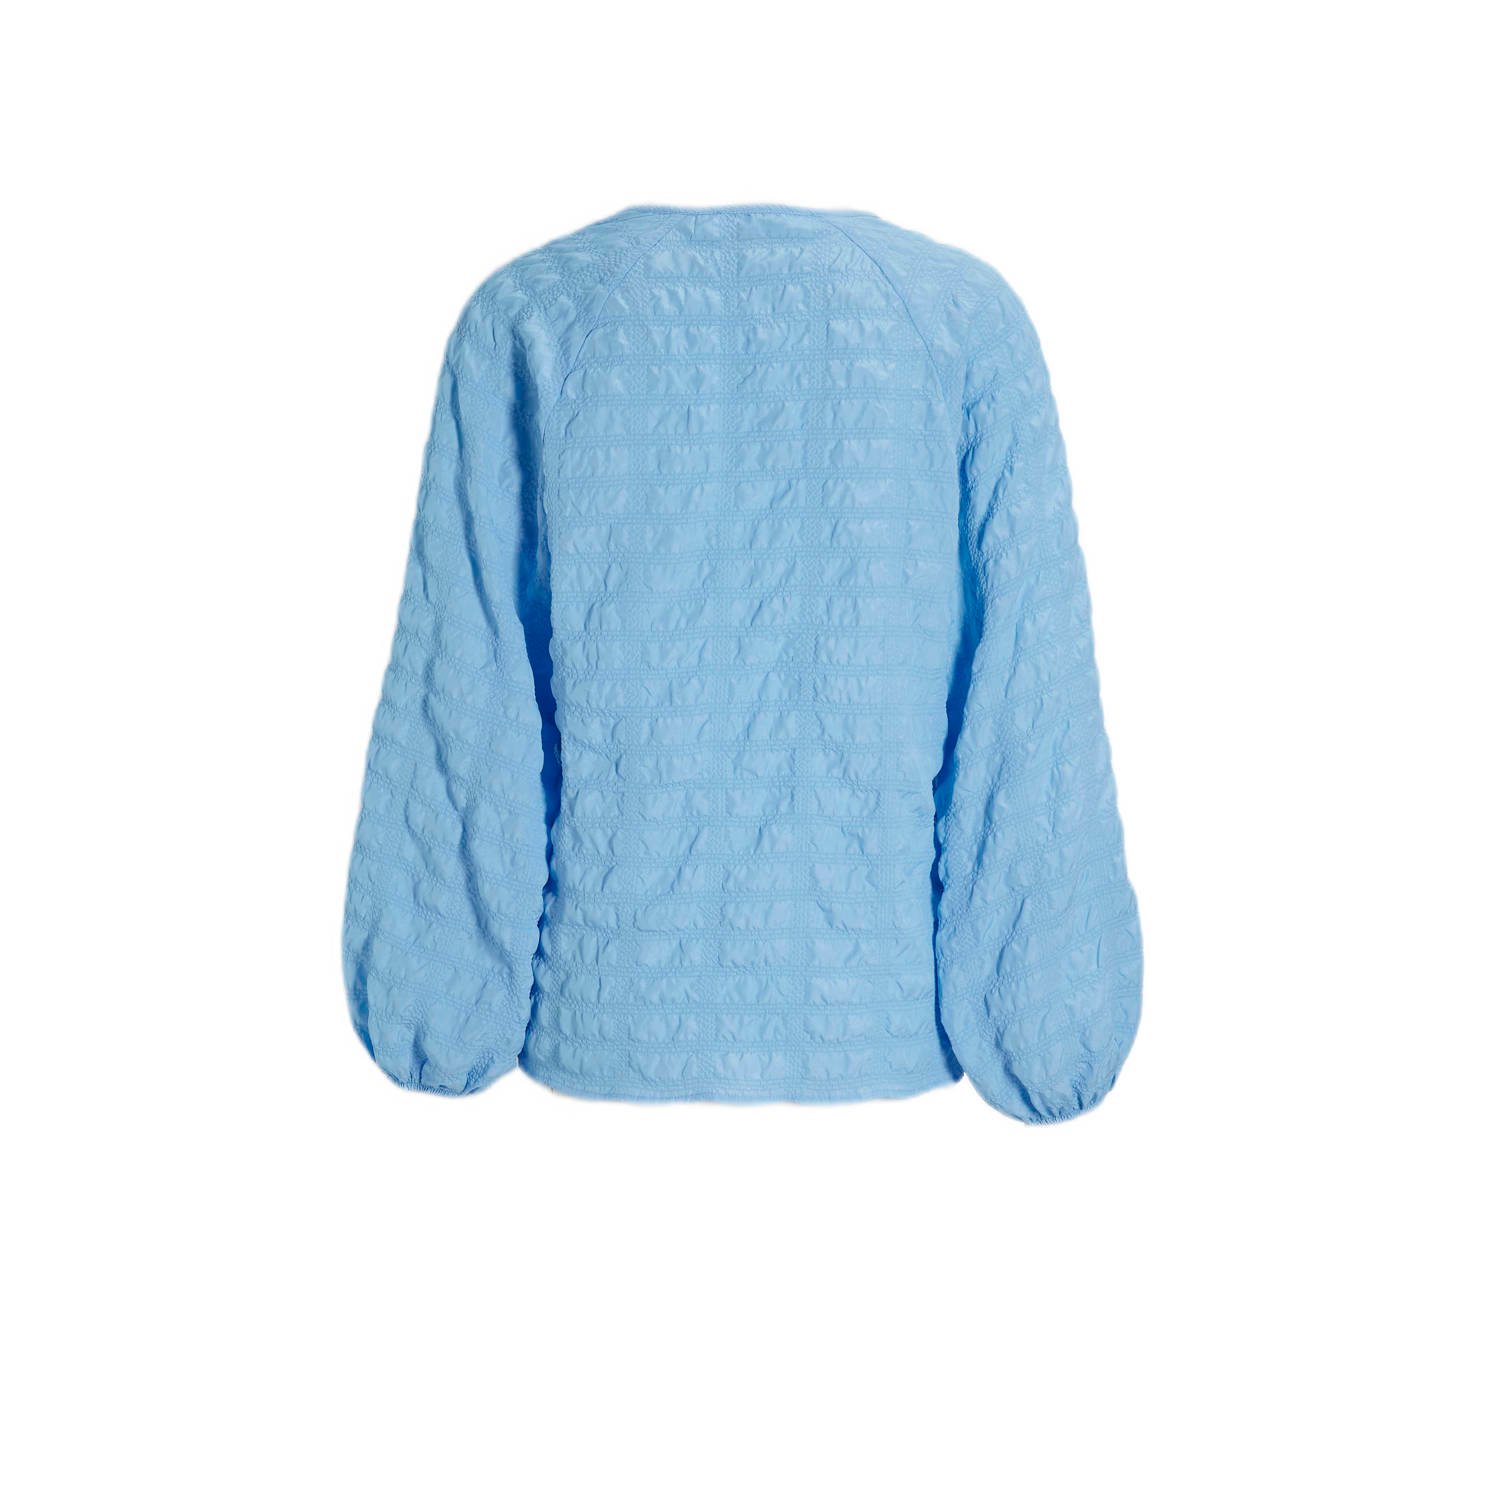 Imagine blouse met textuur blauw